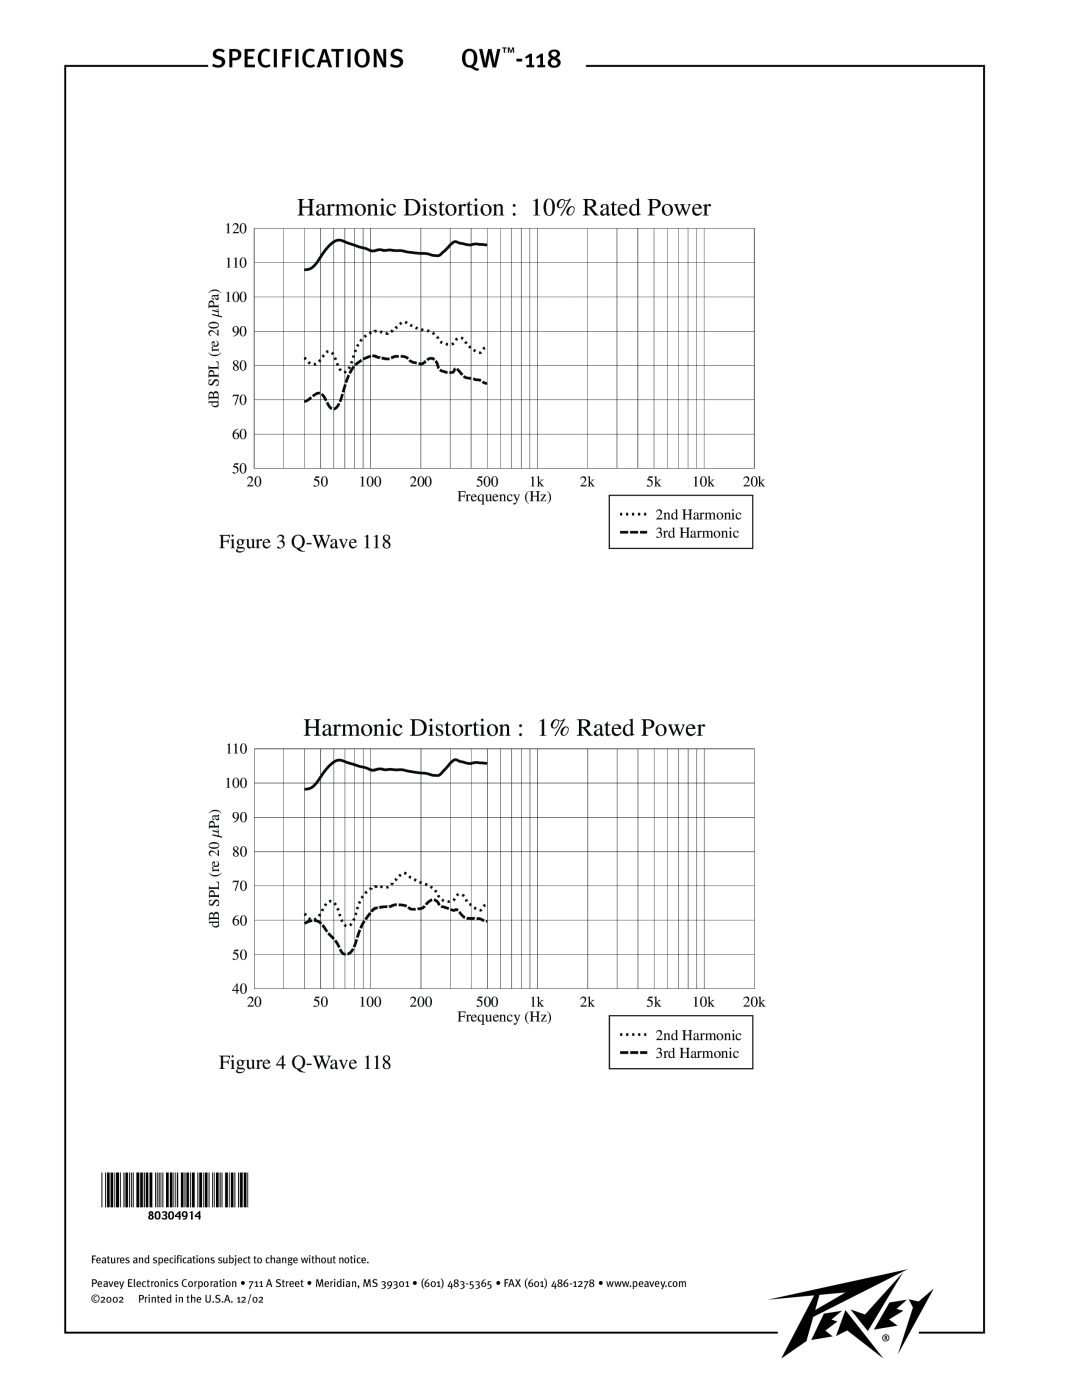 Peavey Harmonic Distortion 10% Rated Power, Harmonic Distortion 1% Rated Power, Q-Wave118, SPECIFICATIONS QW-118 